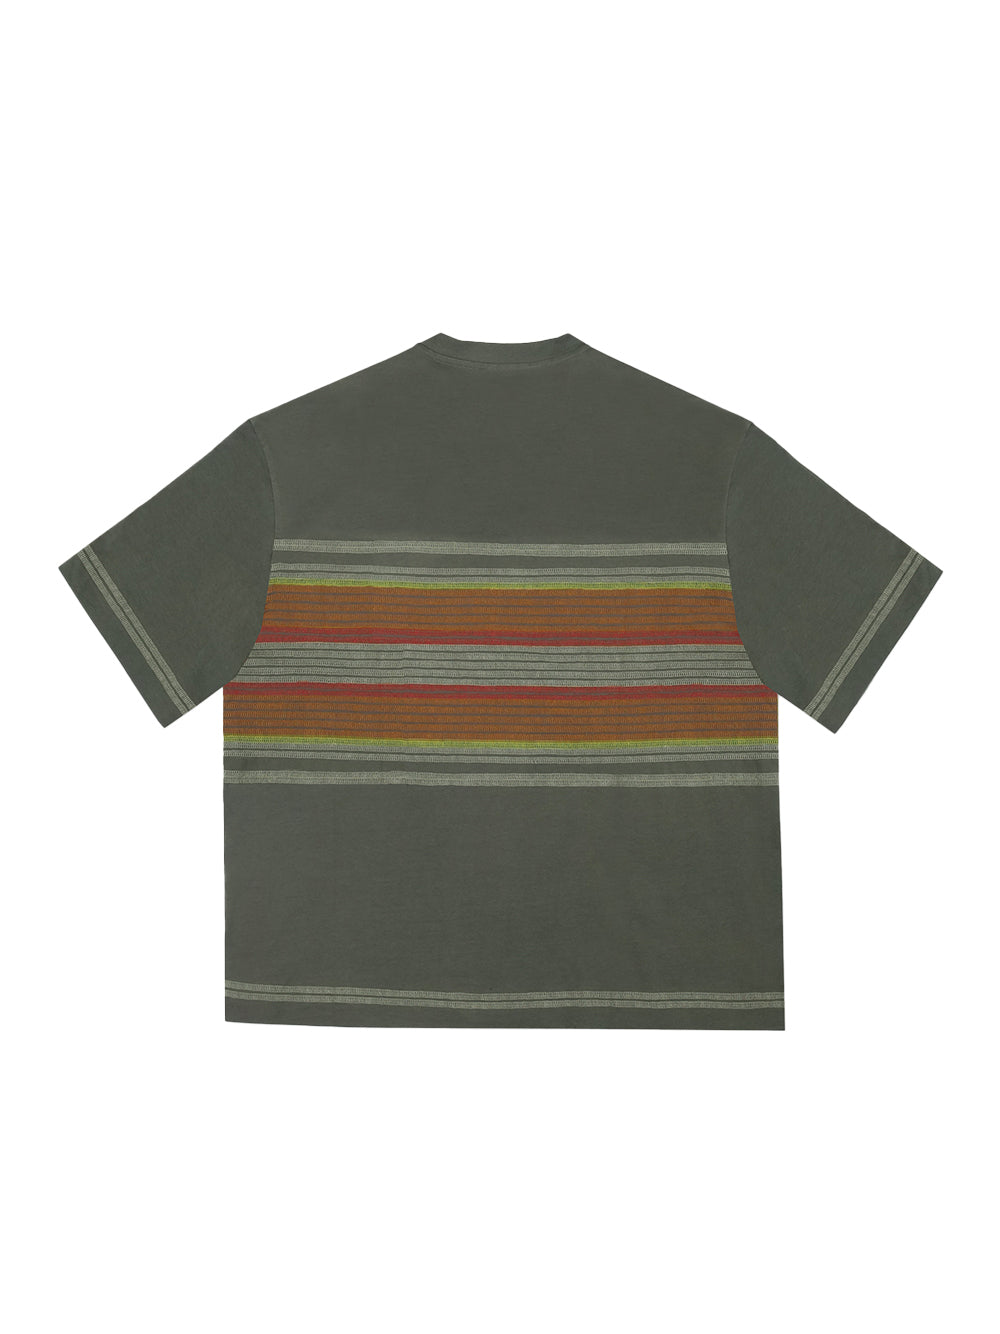 Flatlock Stripe T-Shirt (Olive)